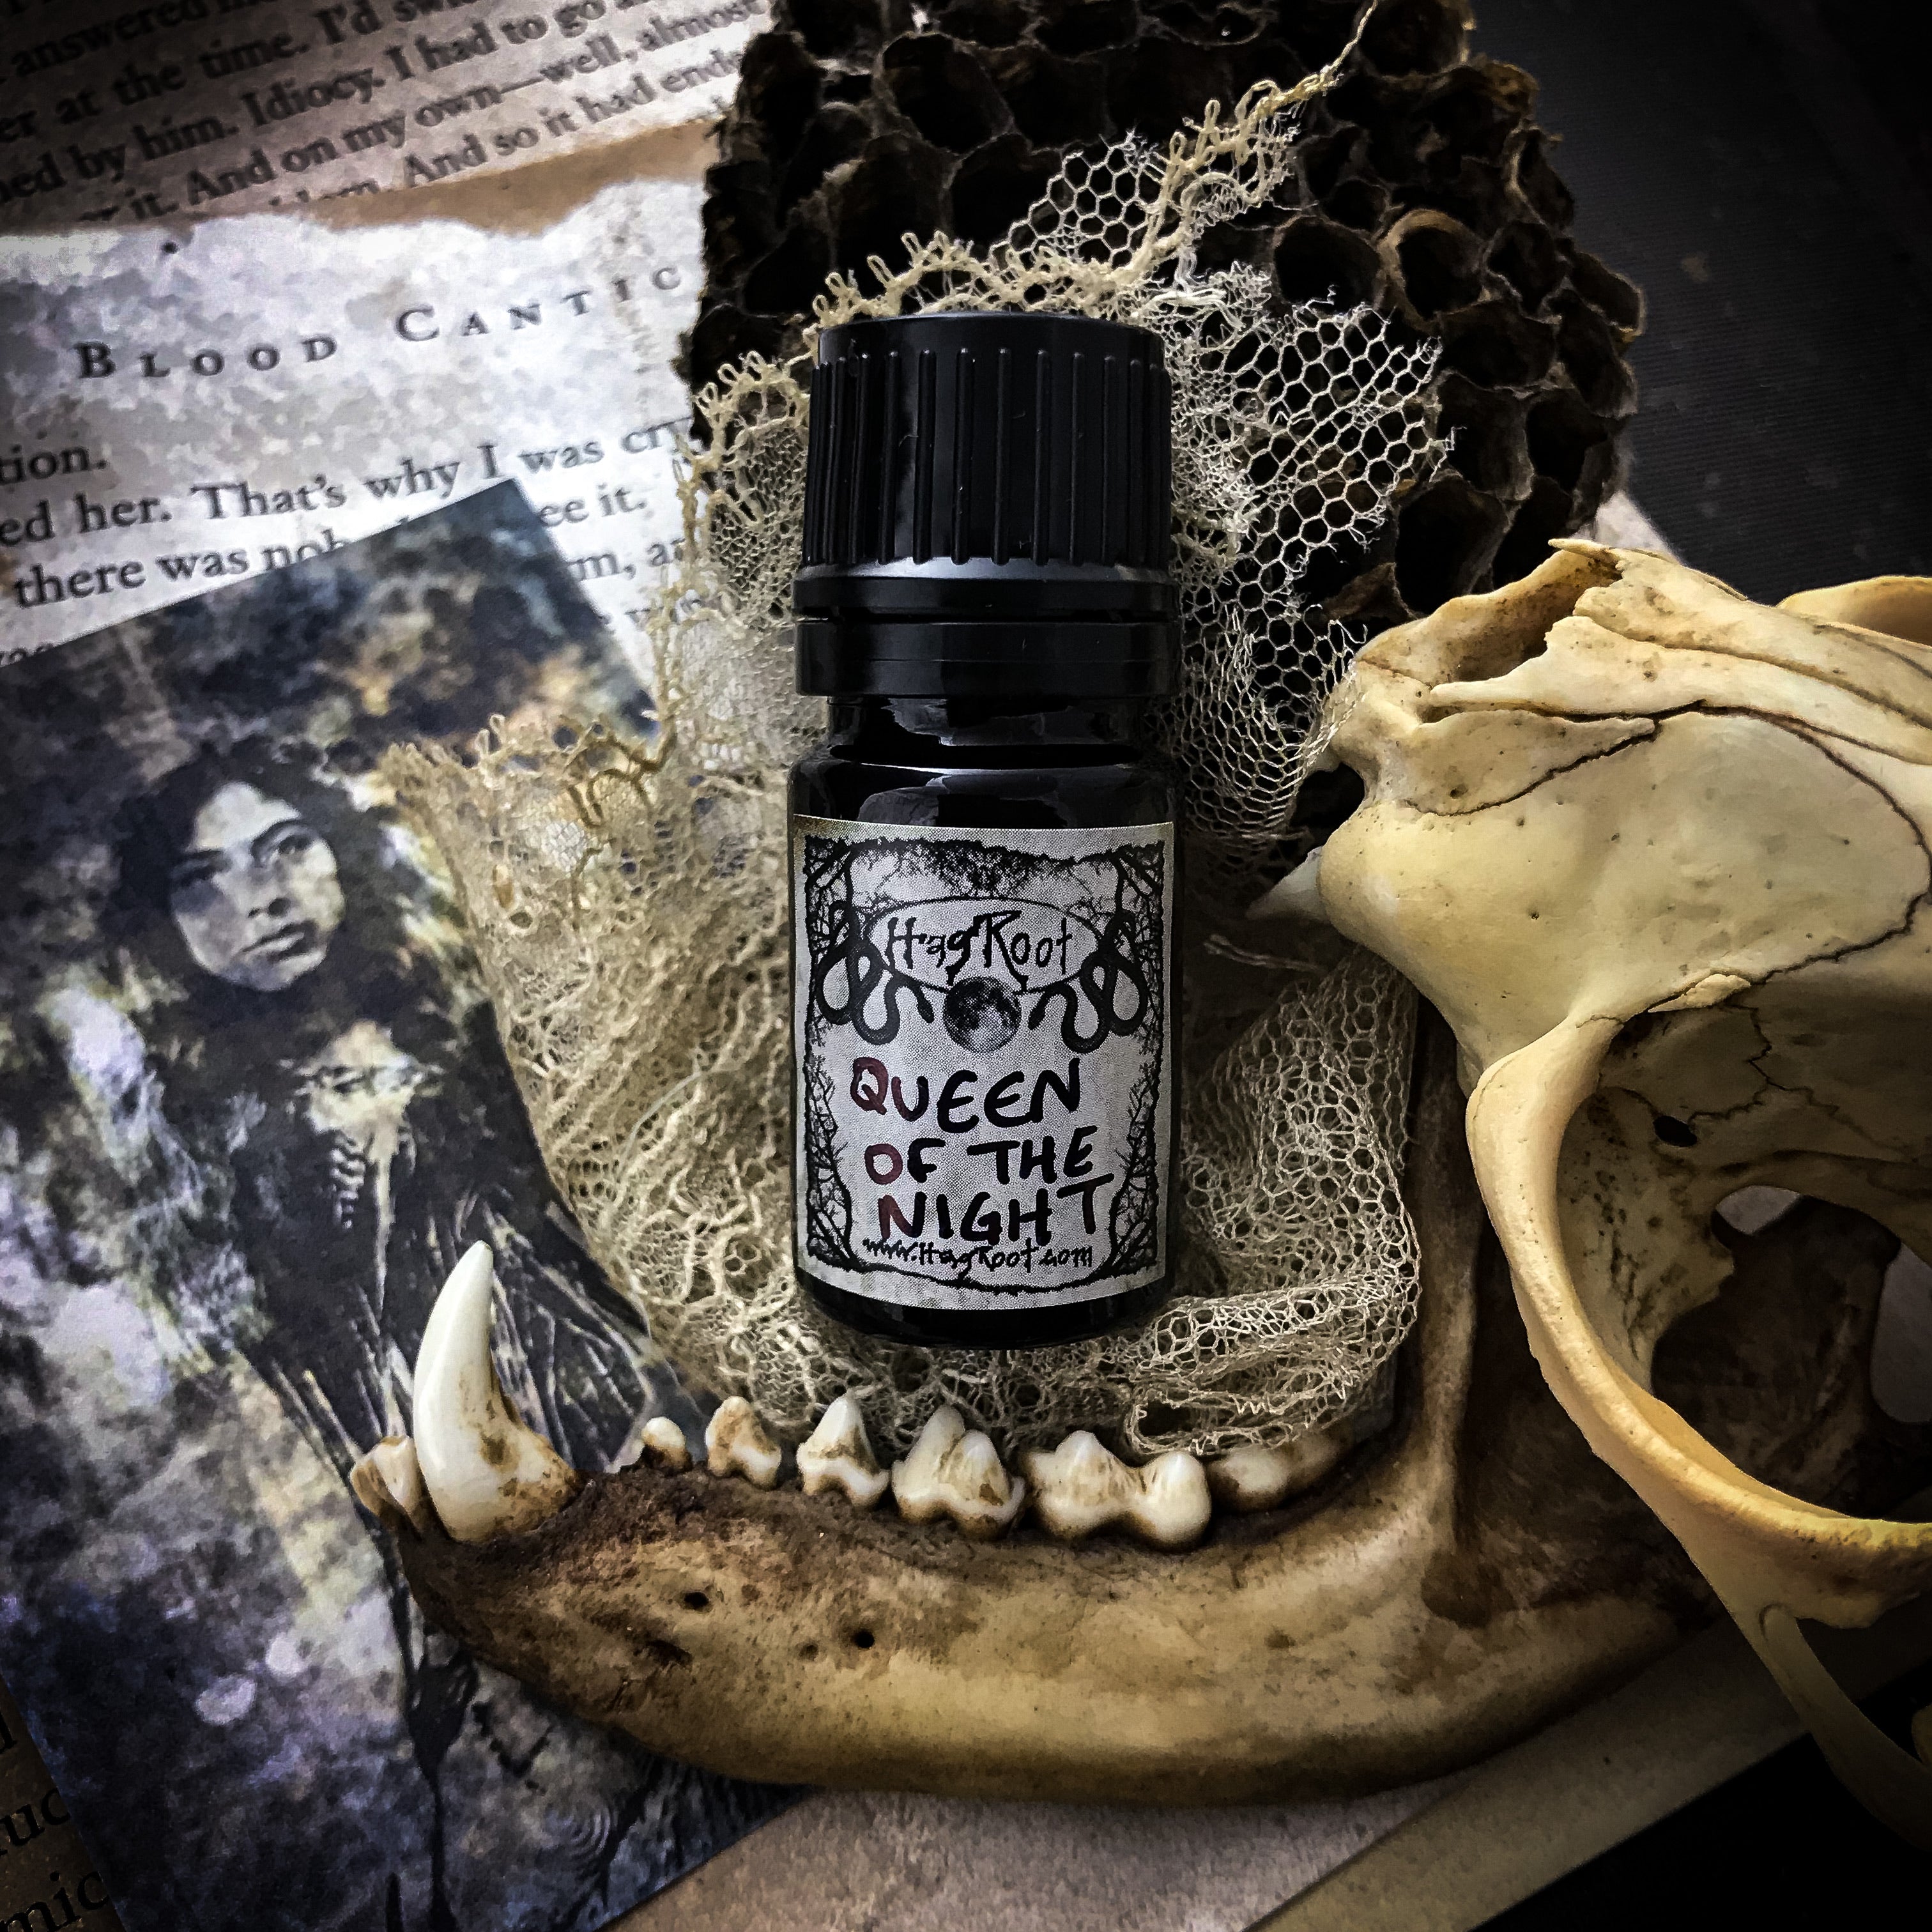 Aroma Queen - Goloka Fragrance / Burner Oil - DRAGONS BLOOD